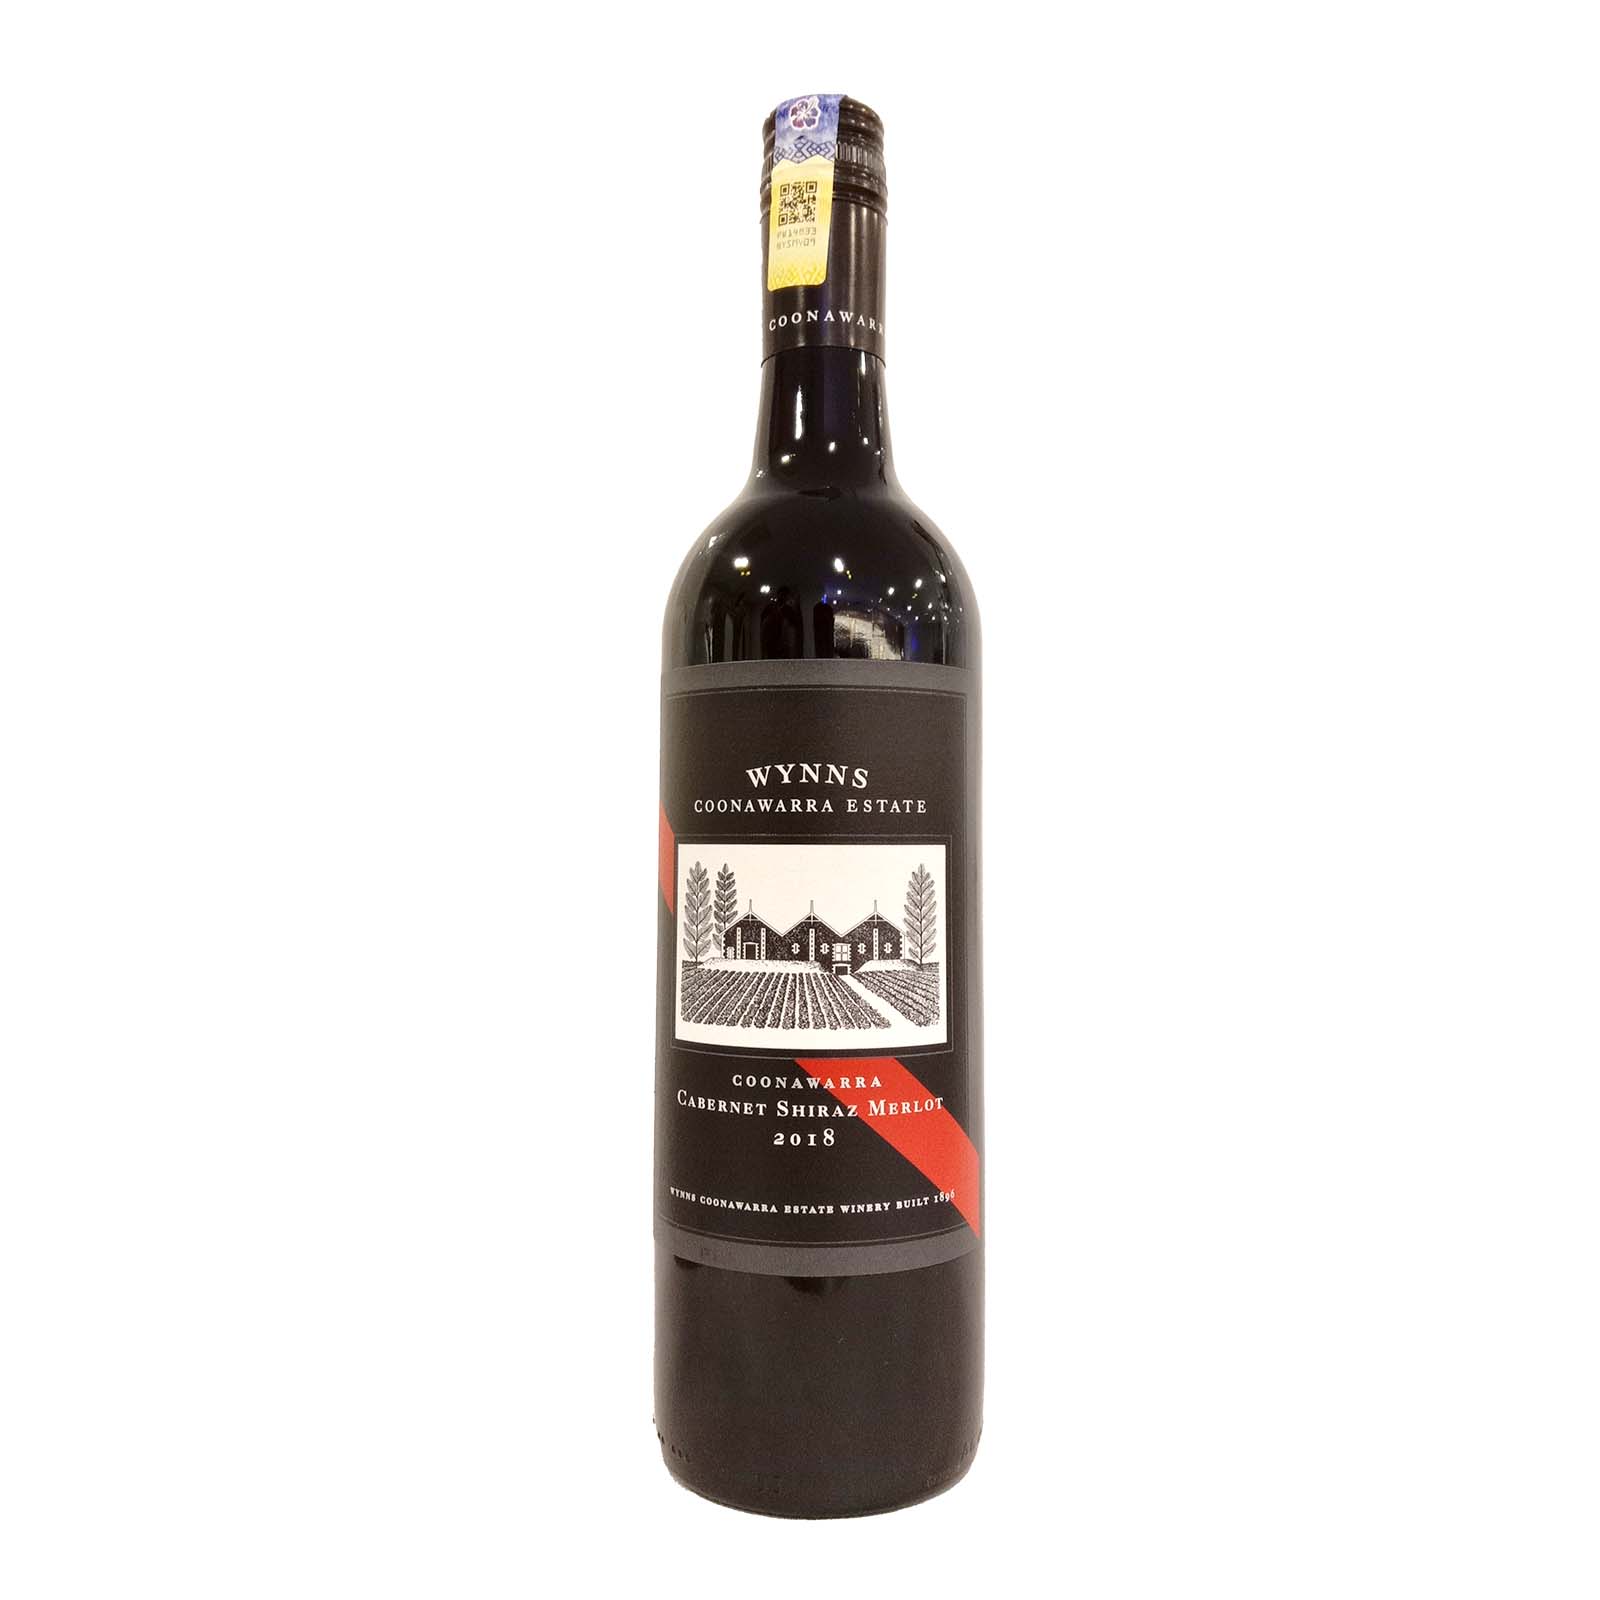 Jacob's Creek Red Merlot 750ml, Imported Wine